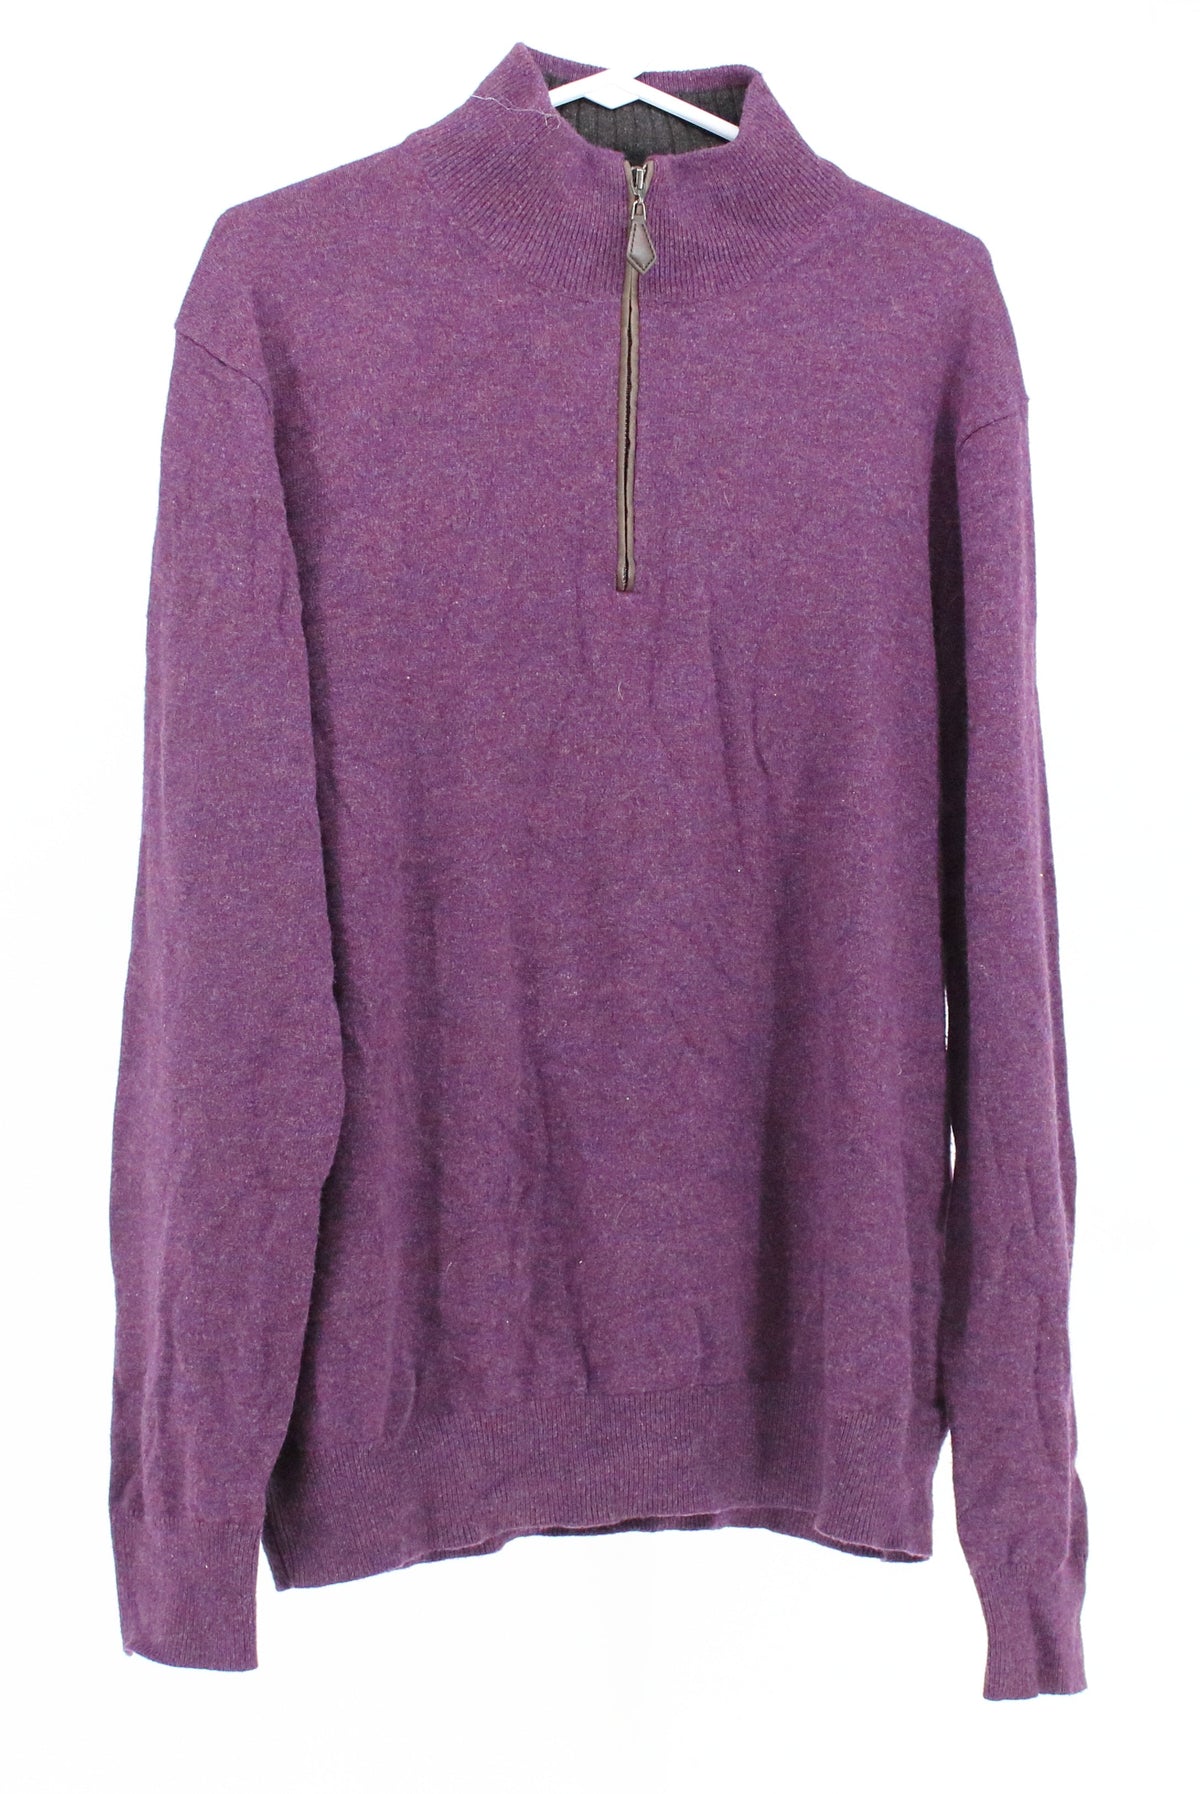 Neiman Marcus Purple Half Zip Up Cashmere Sweater